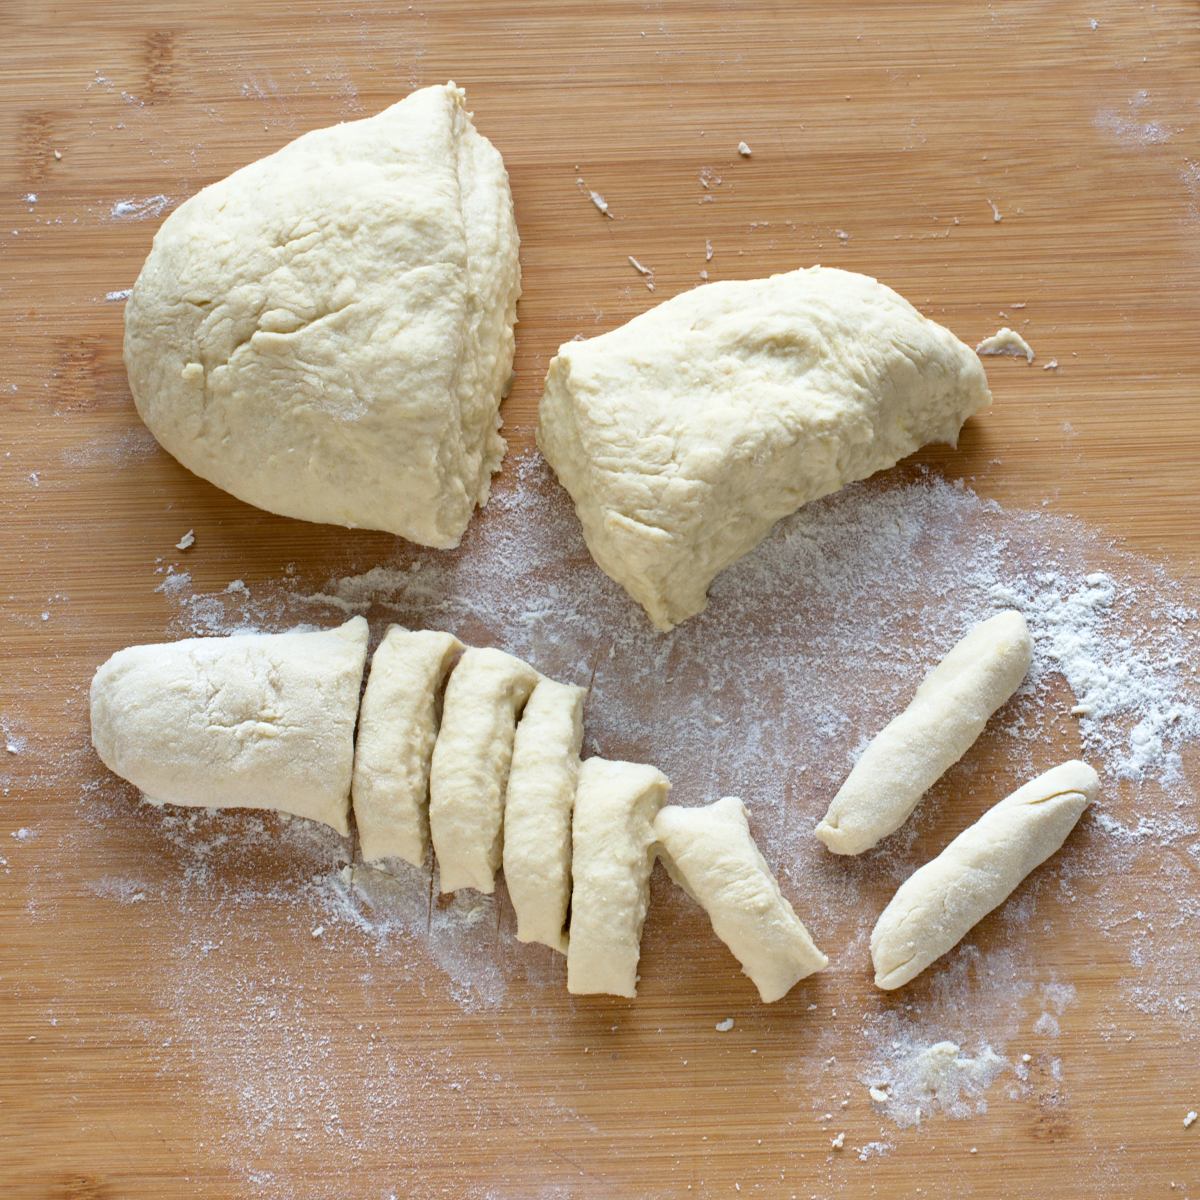 Forming potato dough into šiška shape.